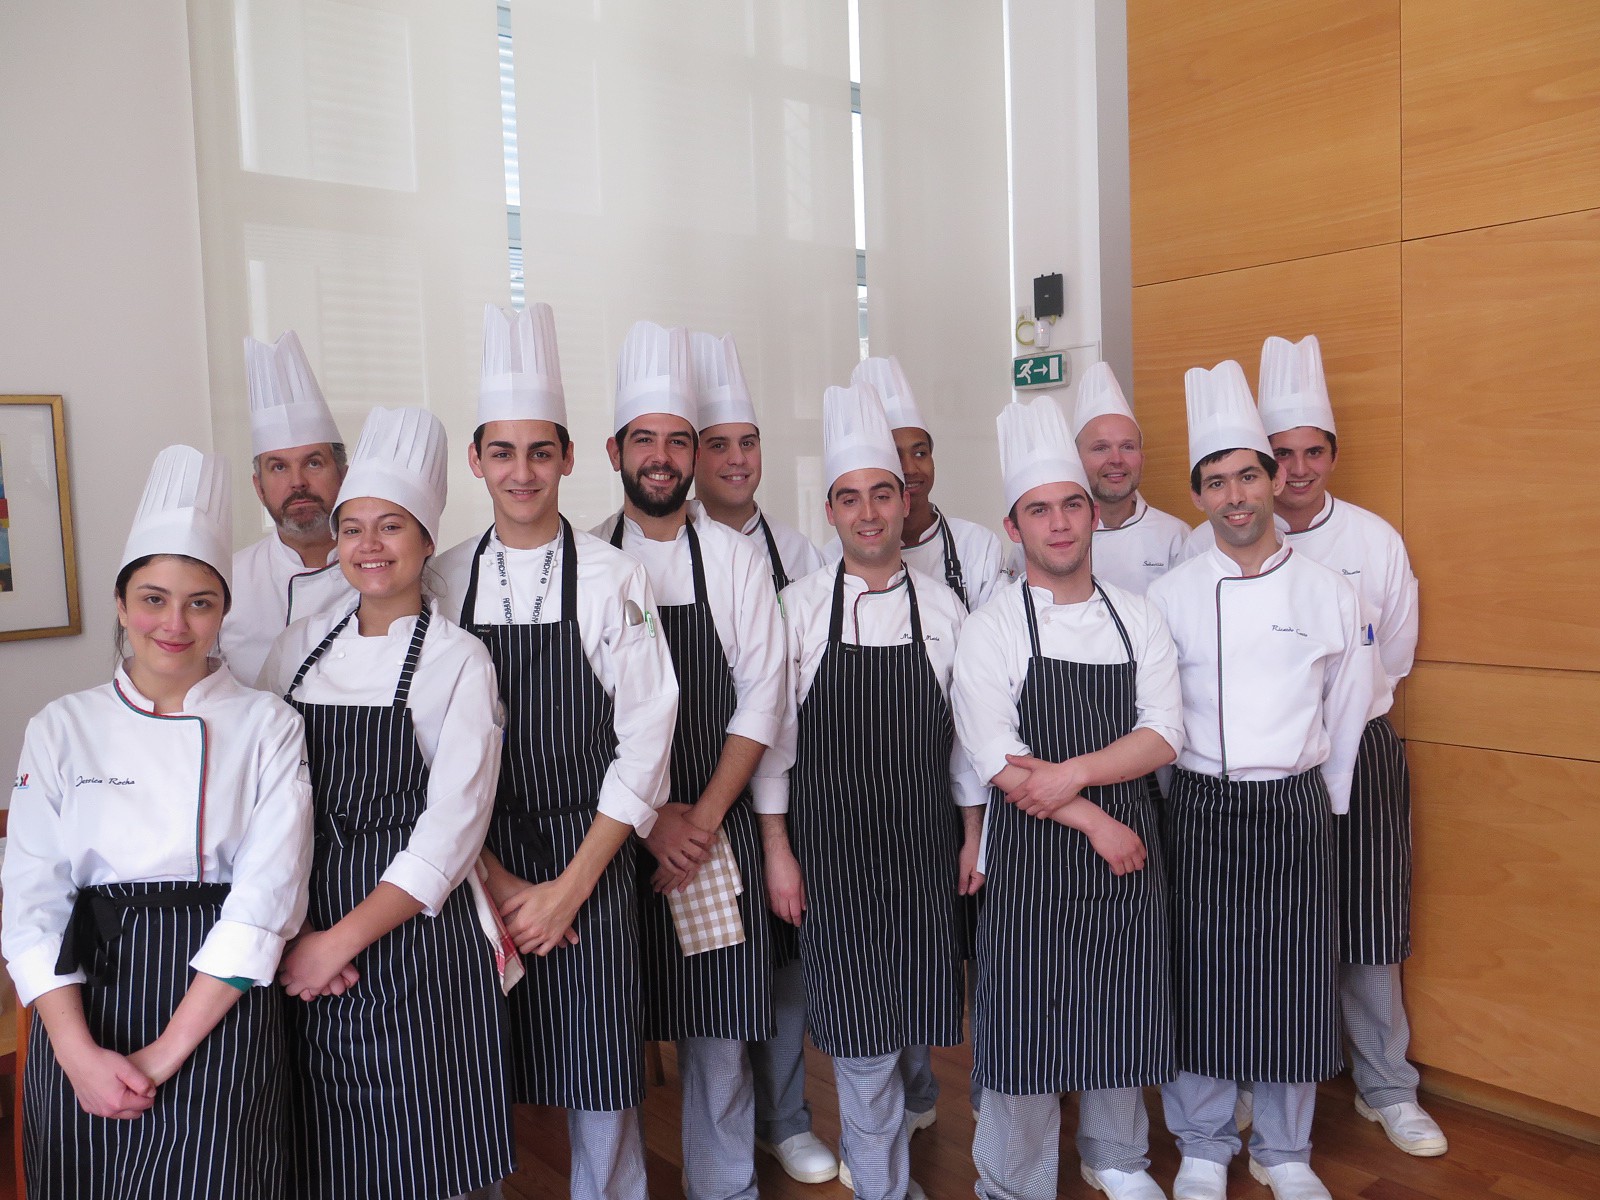 Os alunos da Escola de Hotelaria e Turismo de Lisboa que participaram na final do concurso gastronómico “Goût de France” 2018